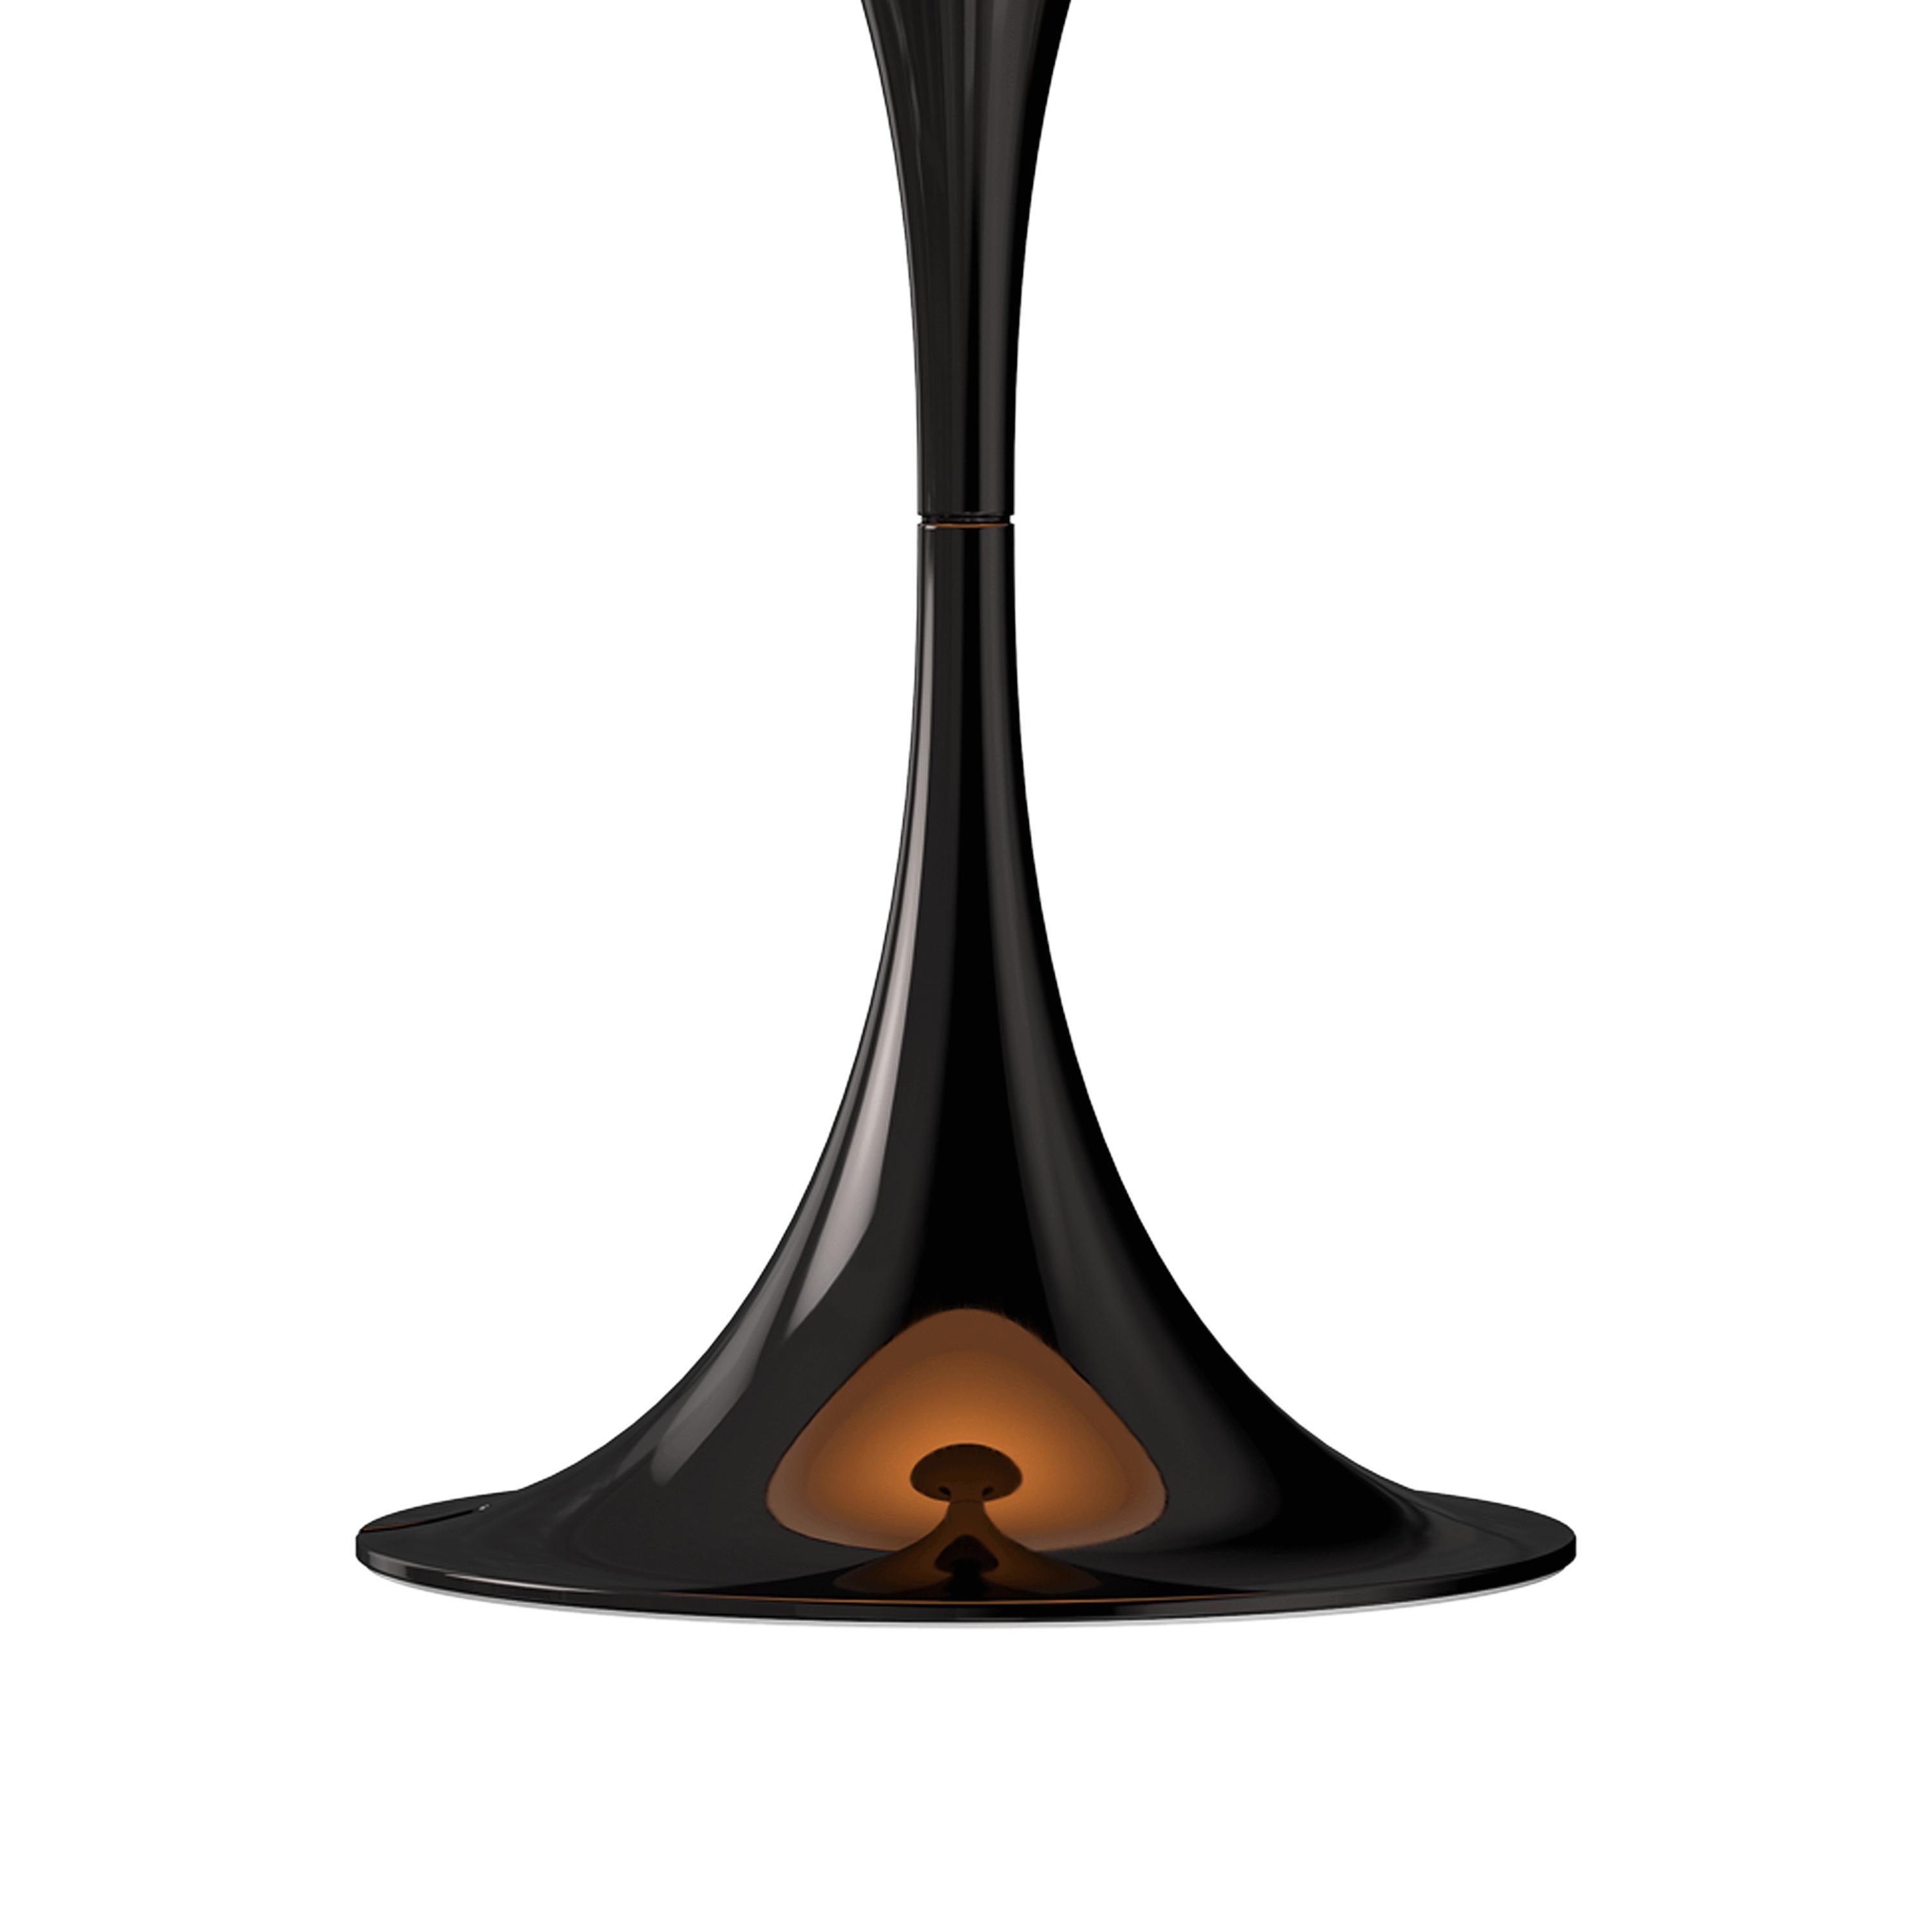 Spun Verner Panton 'Panthella 250' LED Table Lamp in Black for Louis Poulsen For Sale